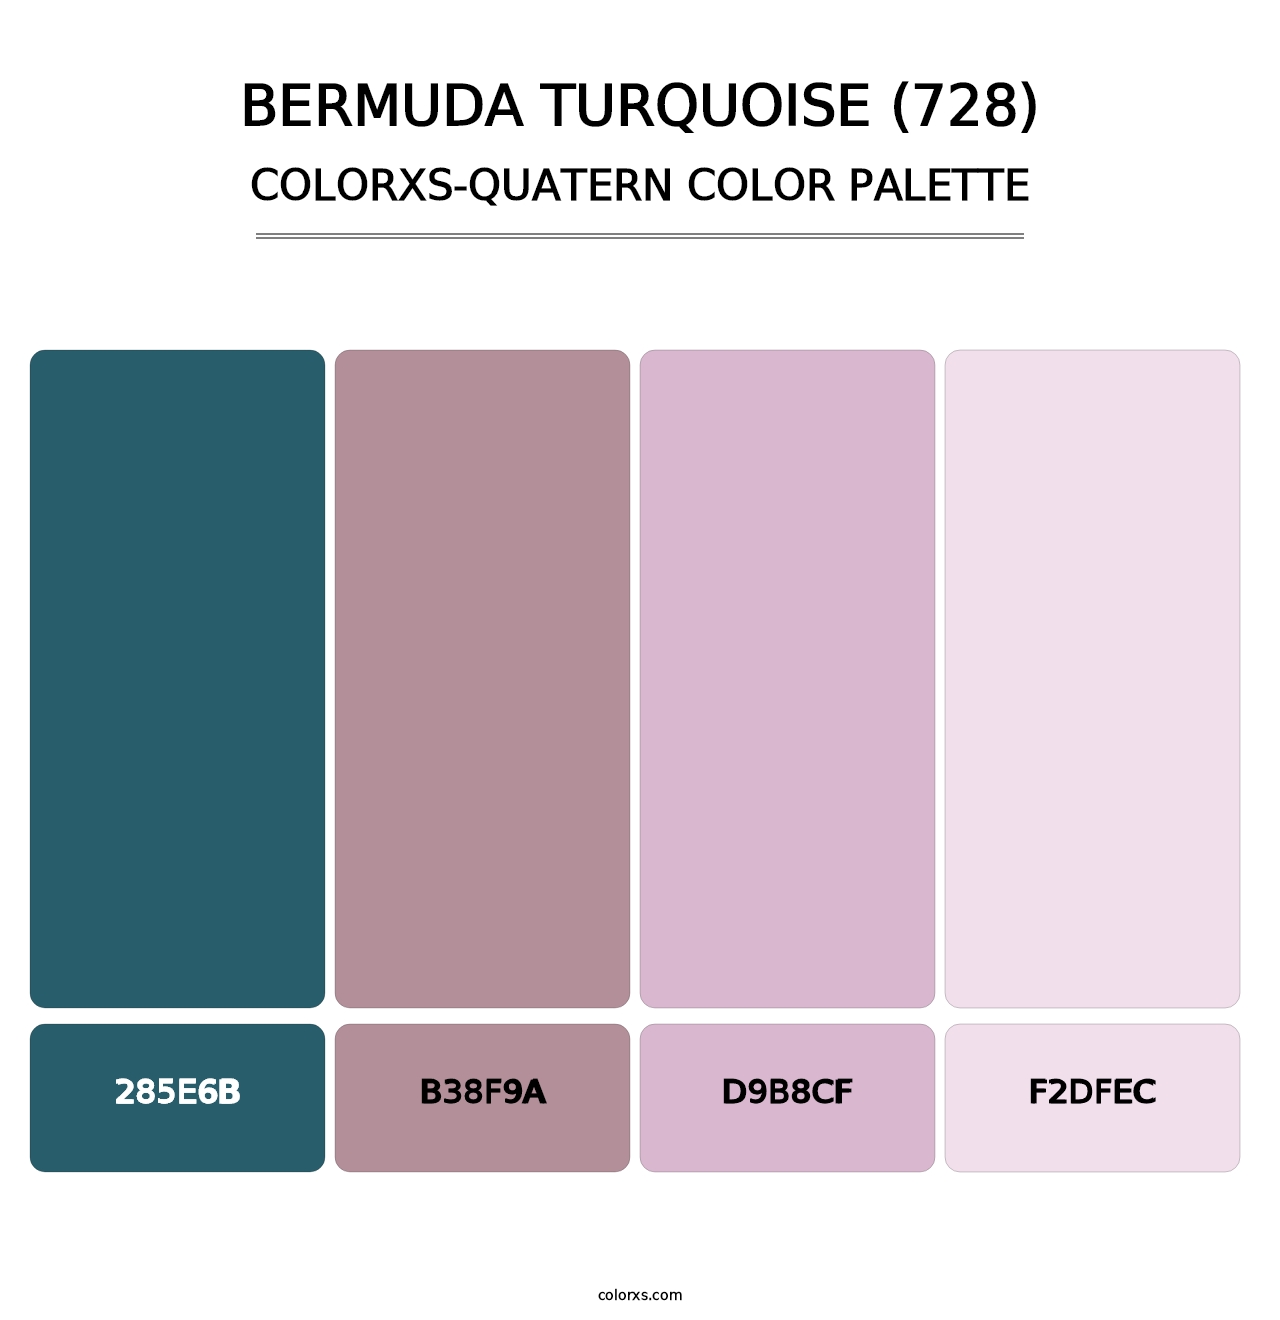 Bermuda Turquoise (728) - Colorxs Quatern Palette